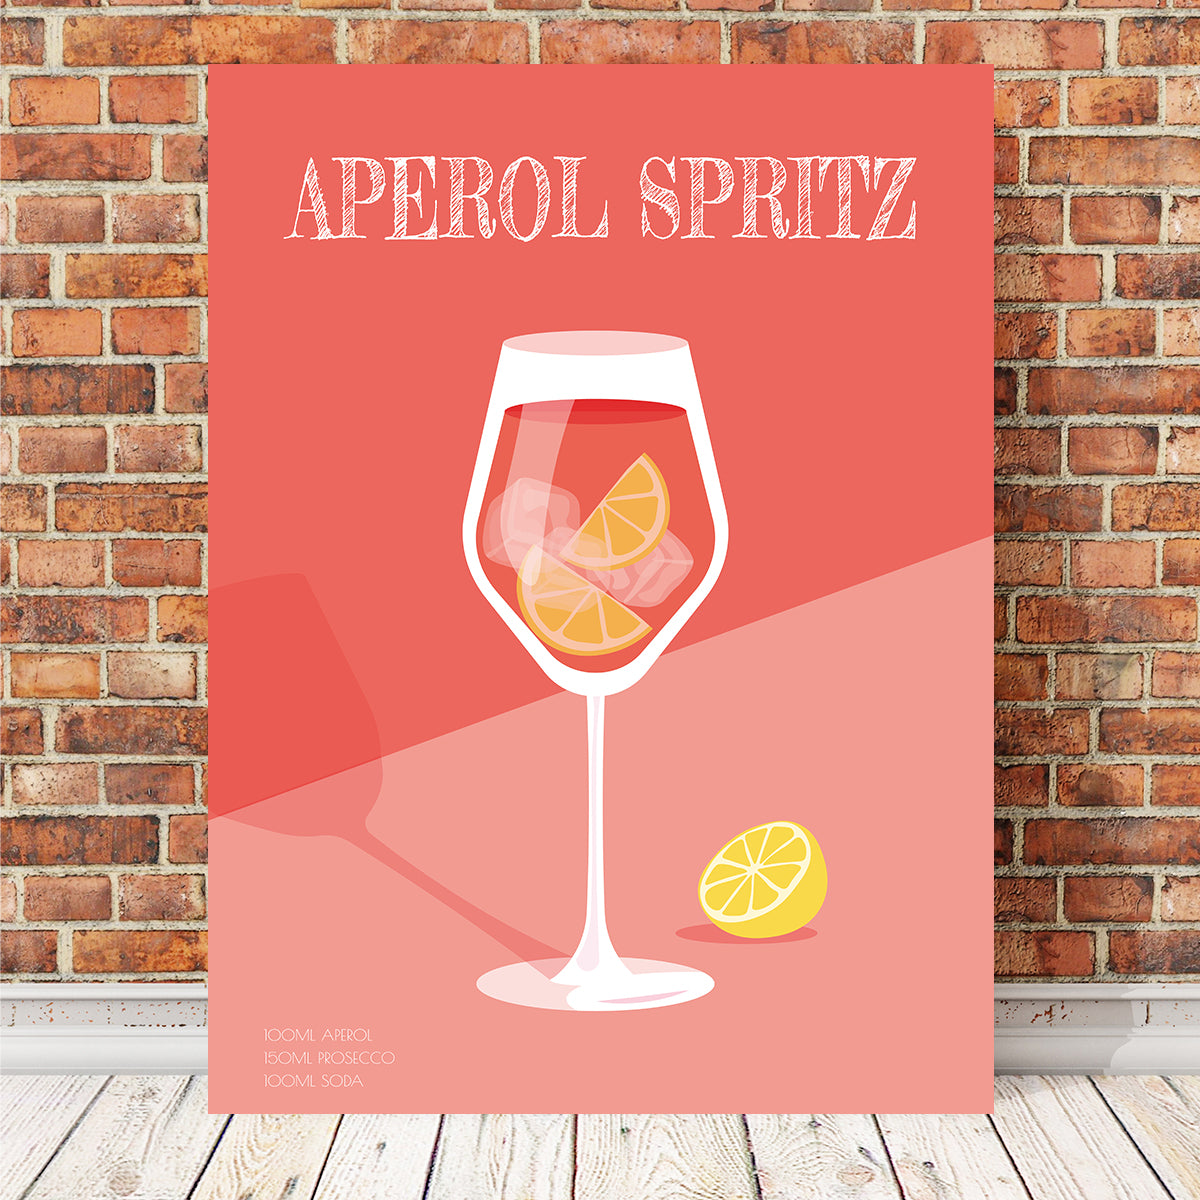 Aperol Sprint